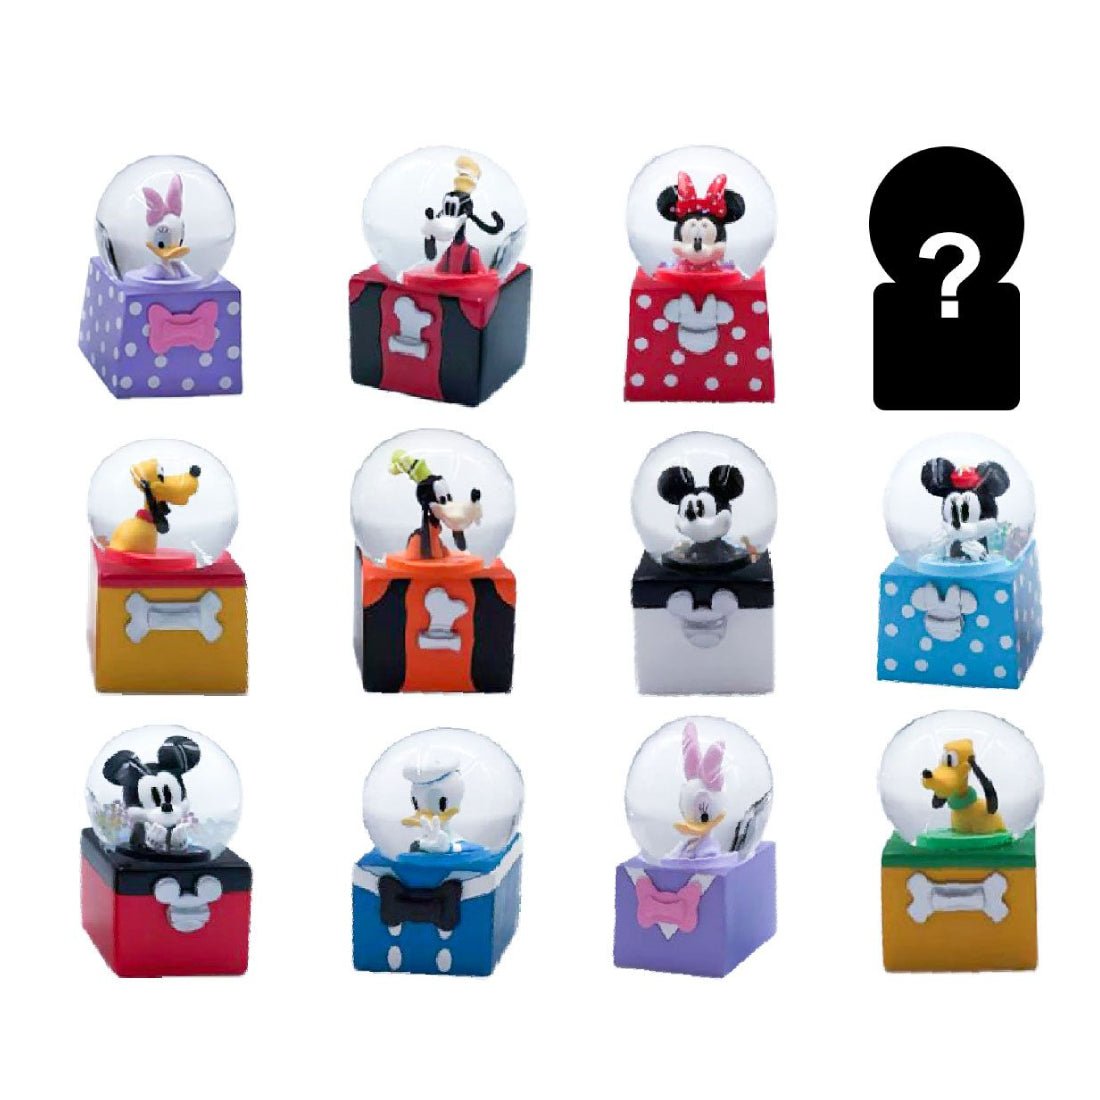 Soap Studio Blind Box - Disney100 Mickey Mouse Mini Snow Globe - مجسم - Store 974 | ستور ٩٧٤